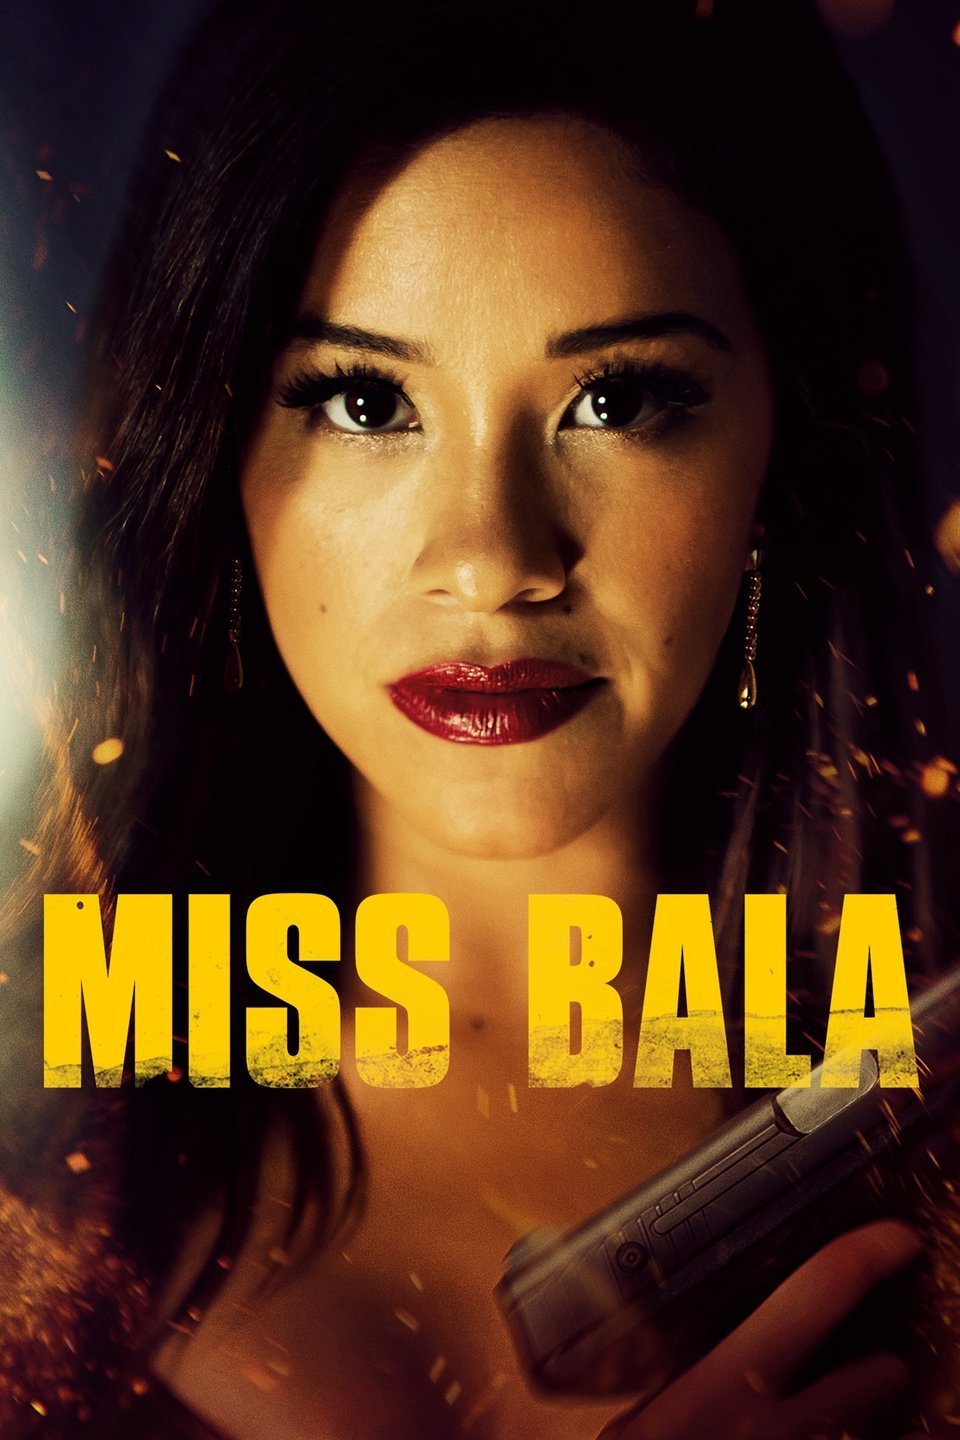 Miss Bala (2019) สวย กล้า ท้าอันตราย